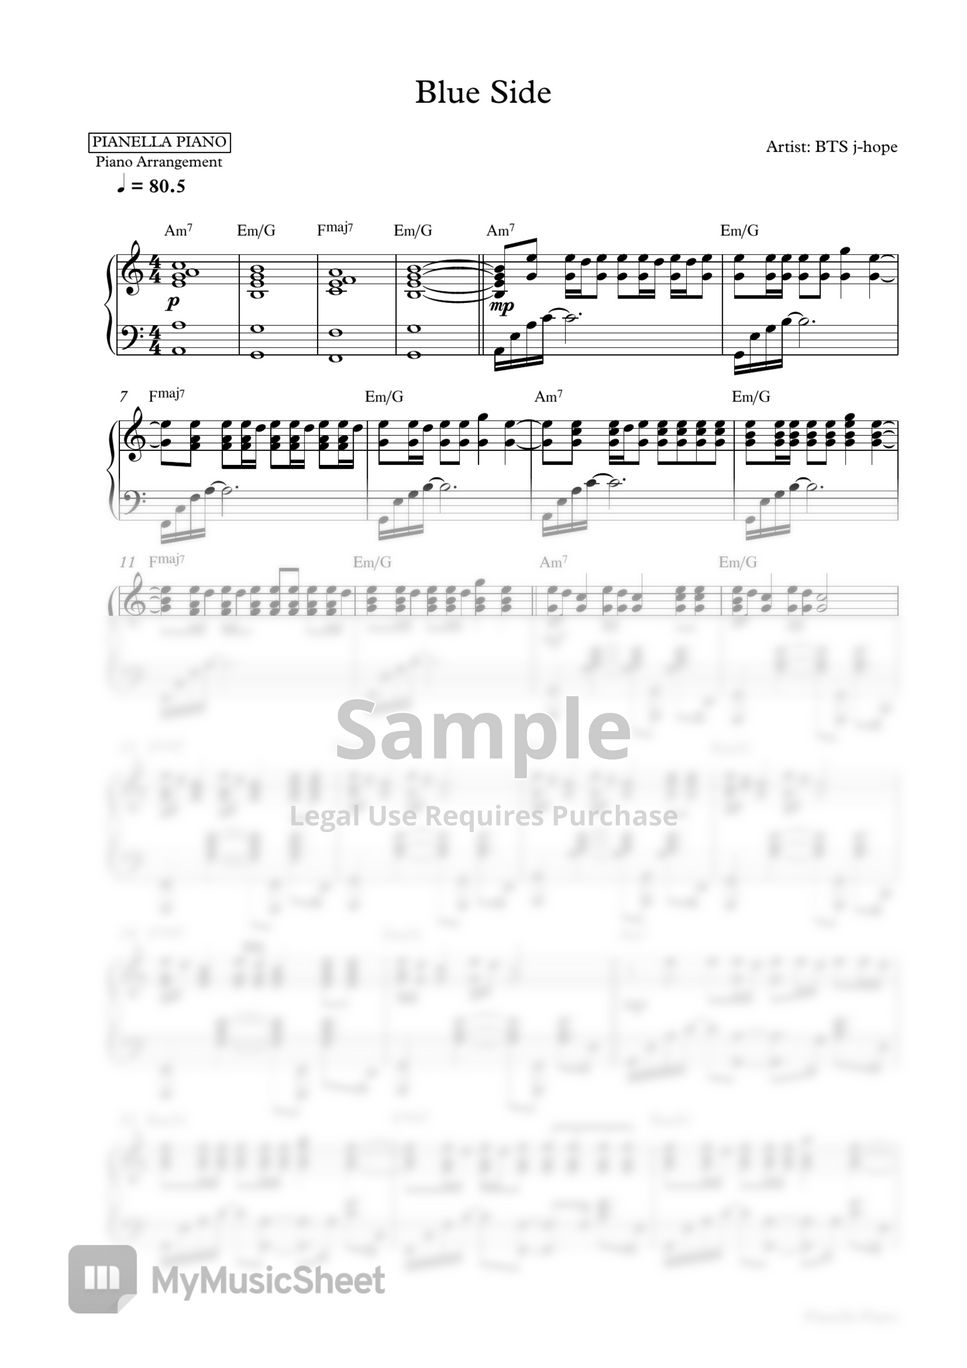 BTS j-hope - Blue Side (Piano Sheet) by Pianella Piano